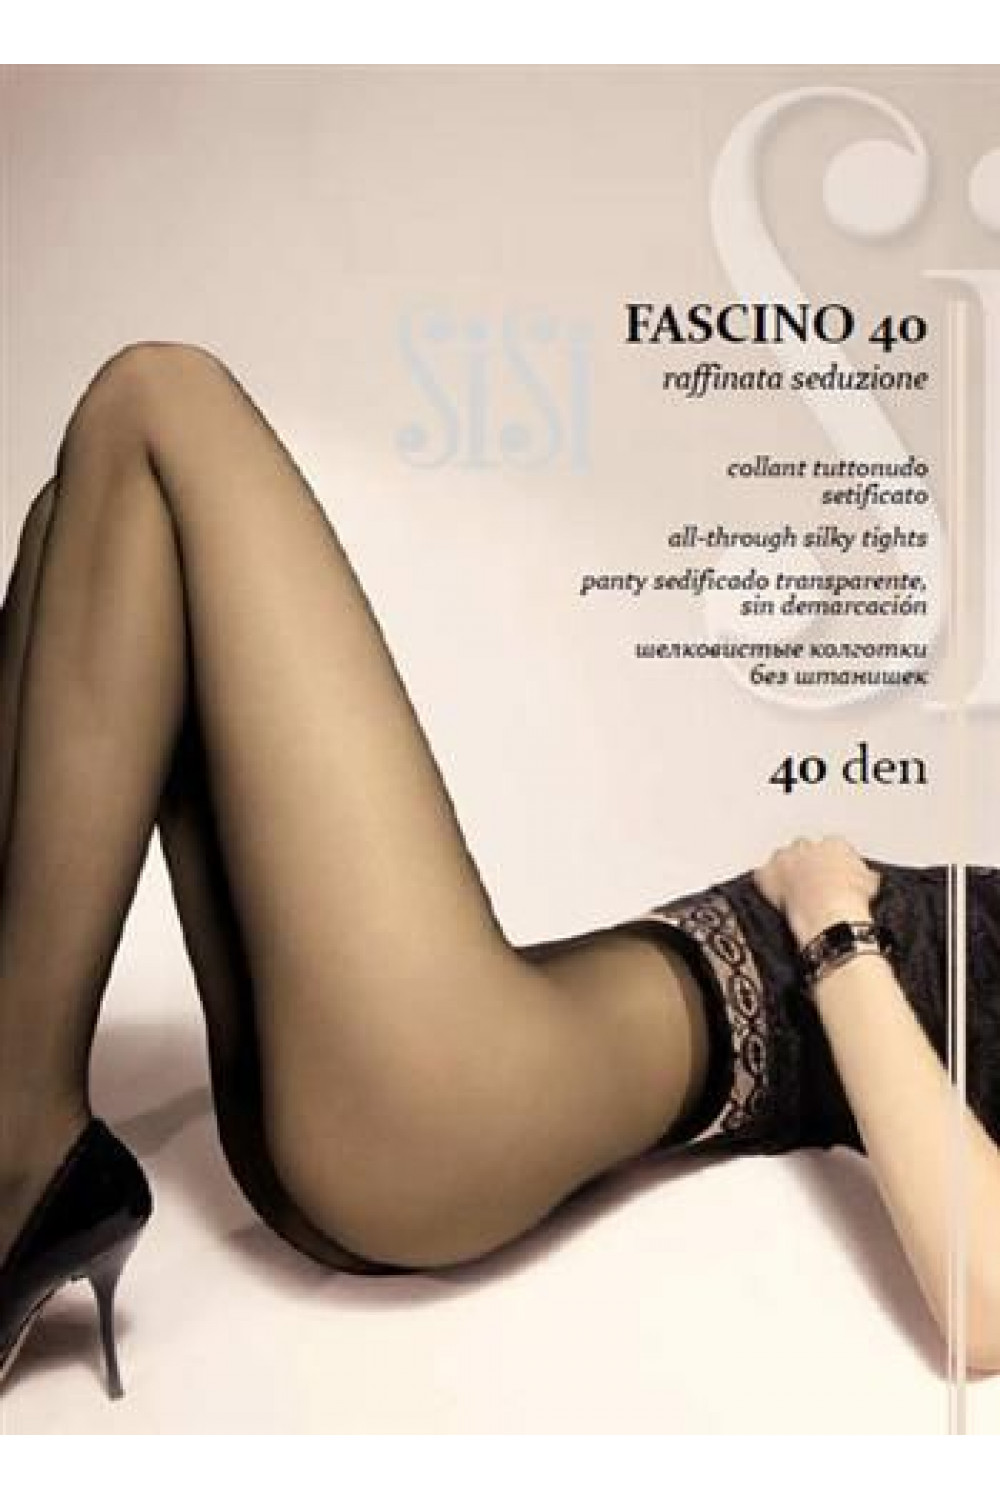 Fascino 40 (80/5)